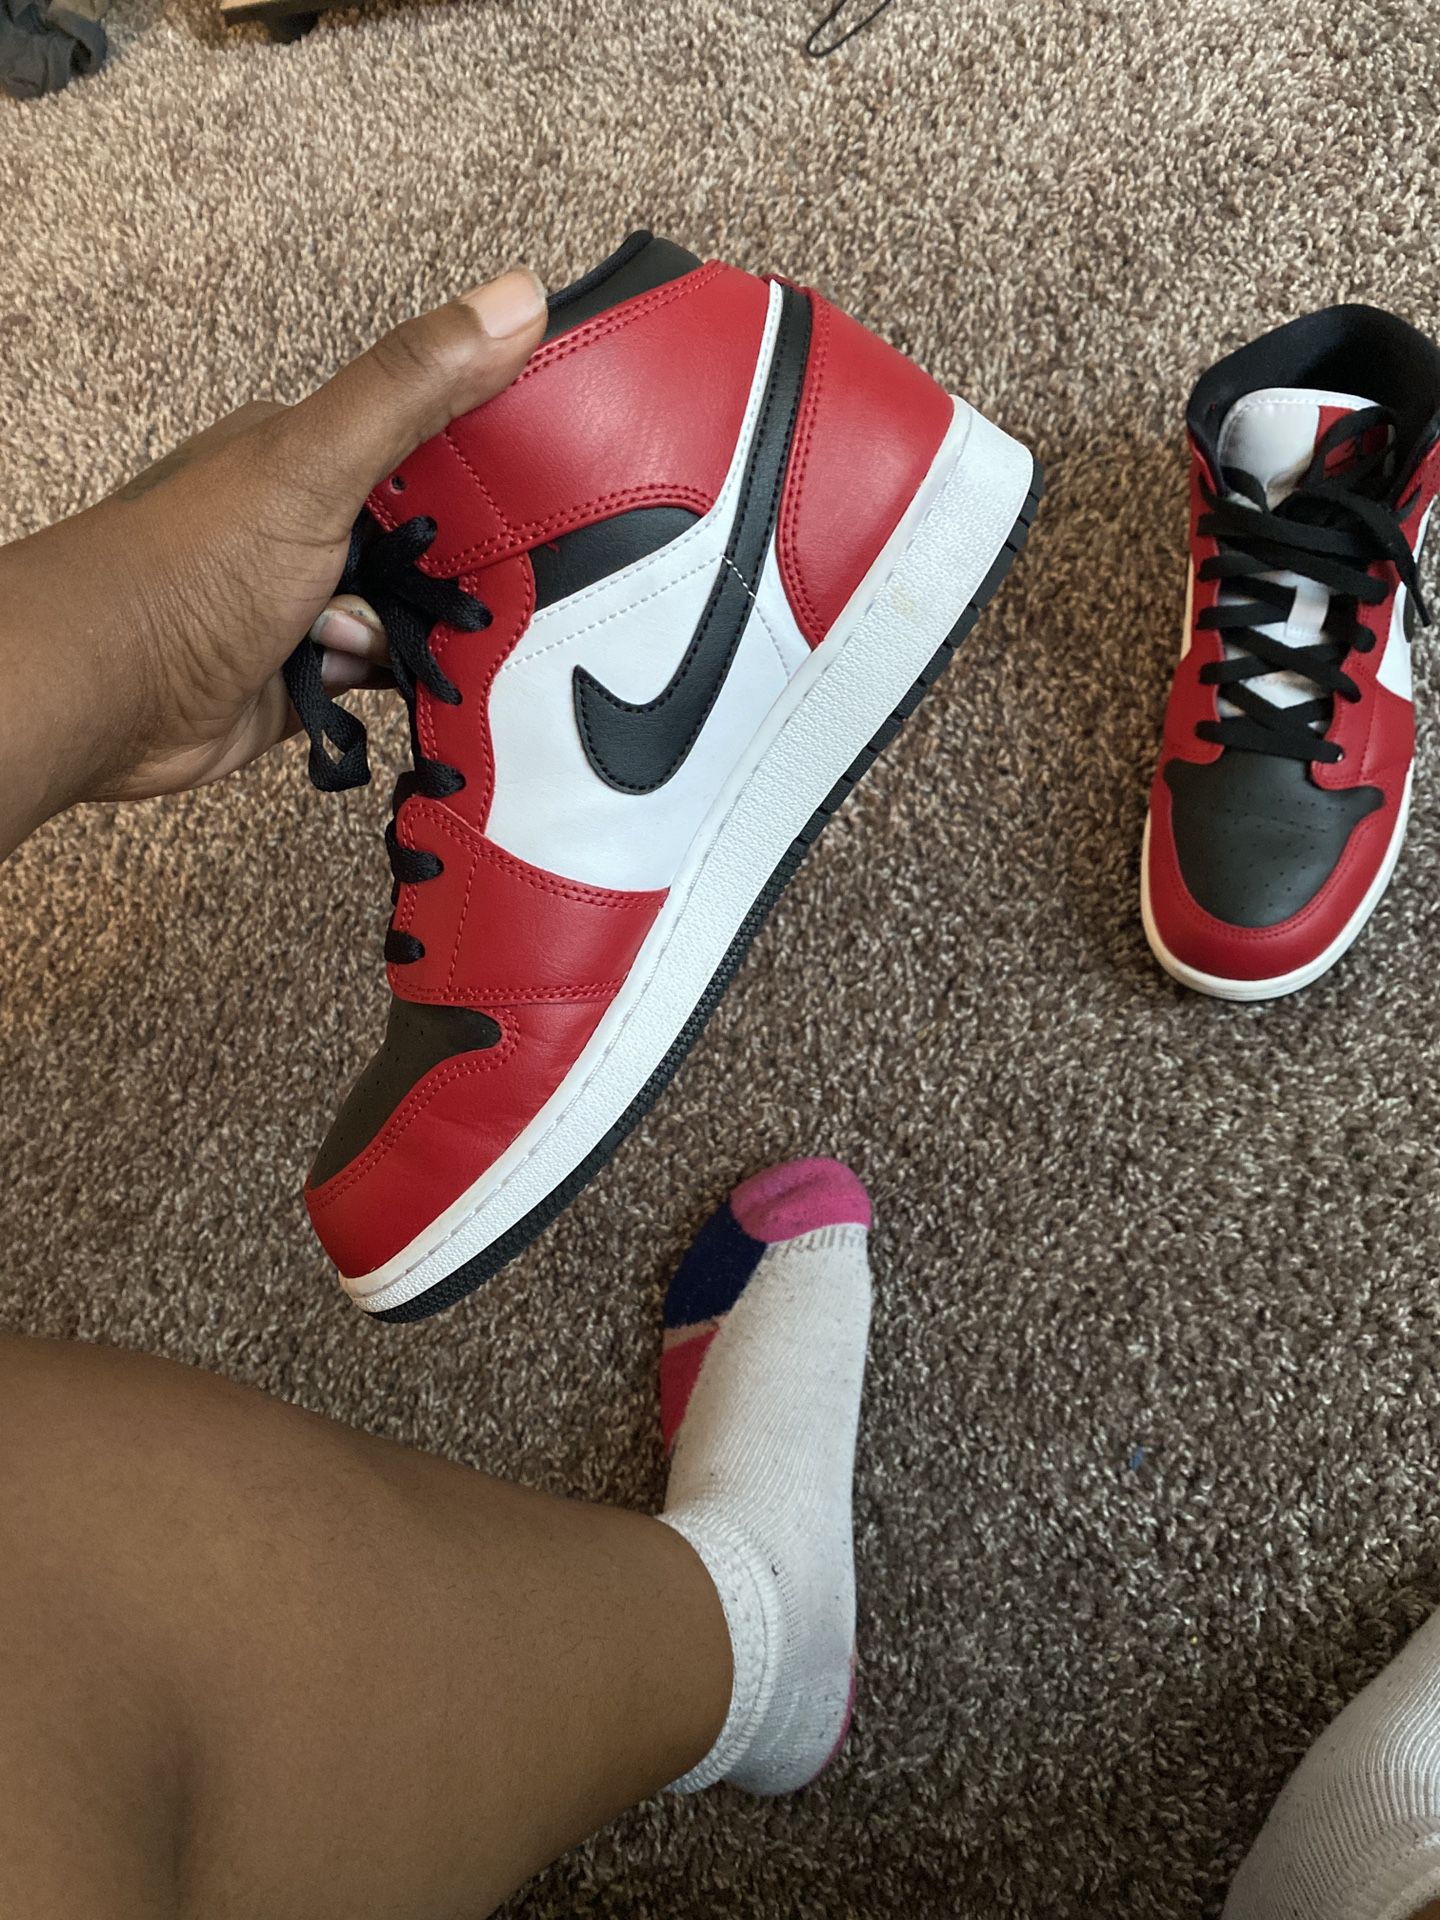 Brand new Jordan 1s Size 7